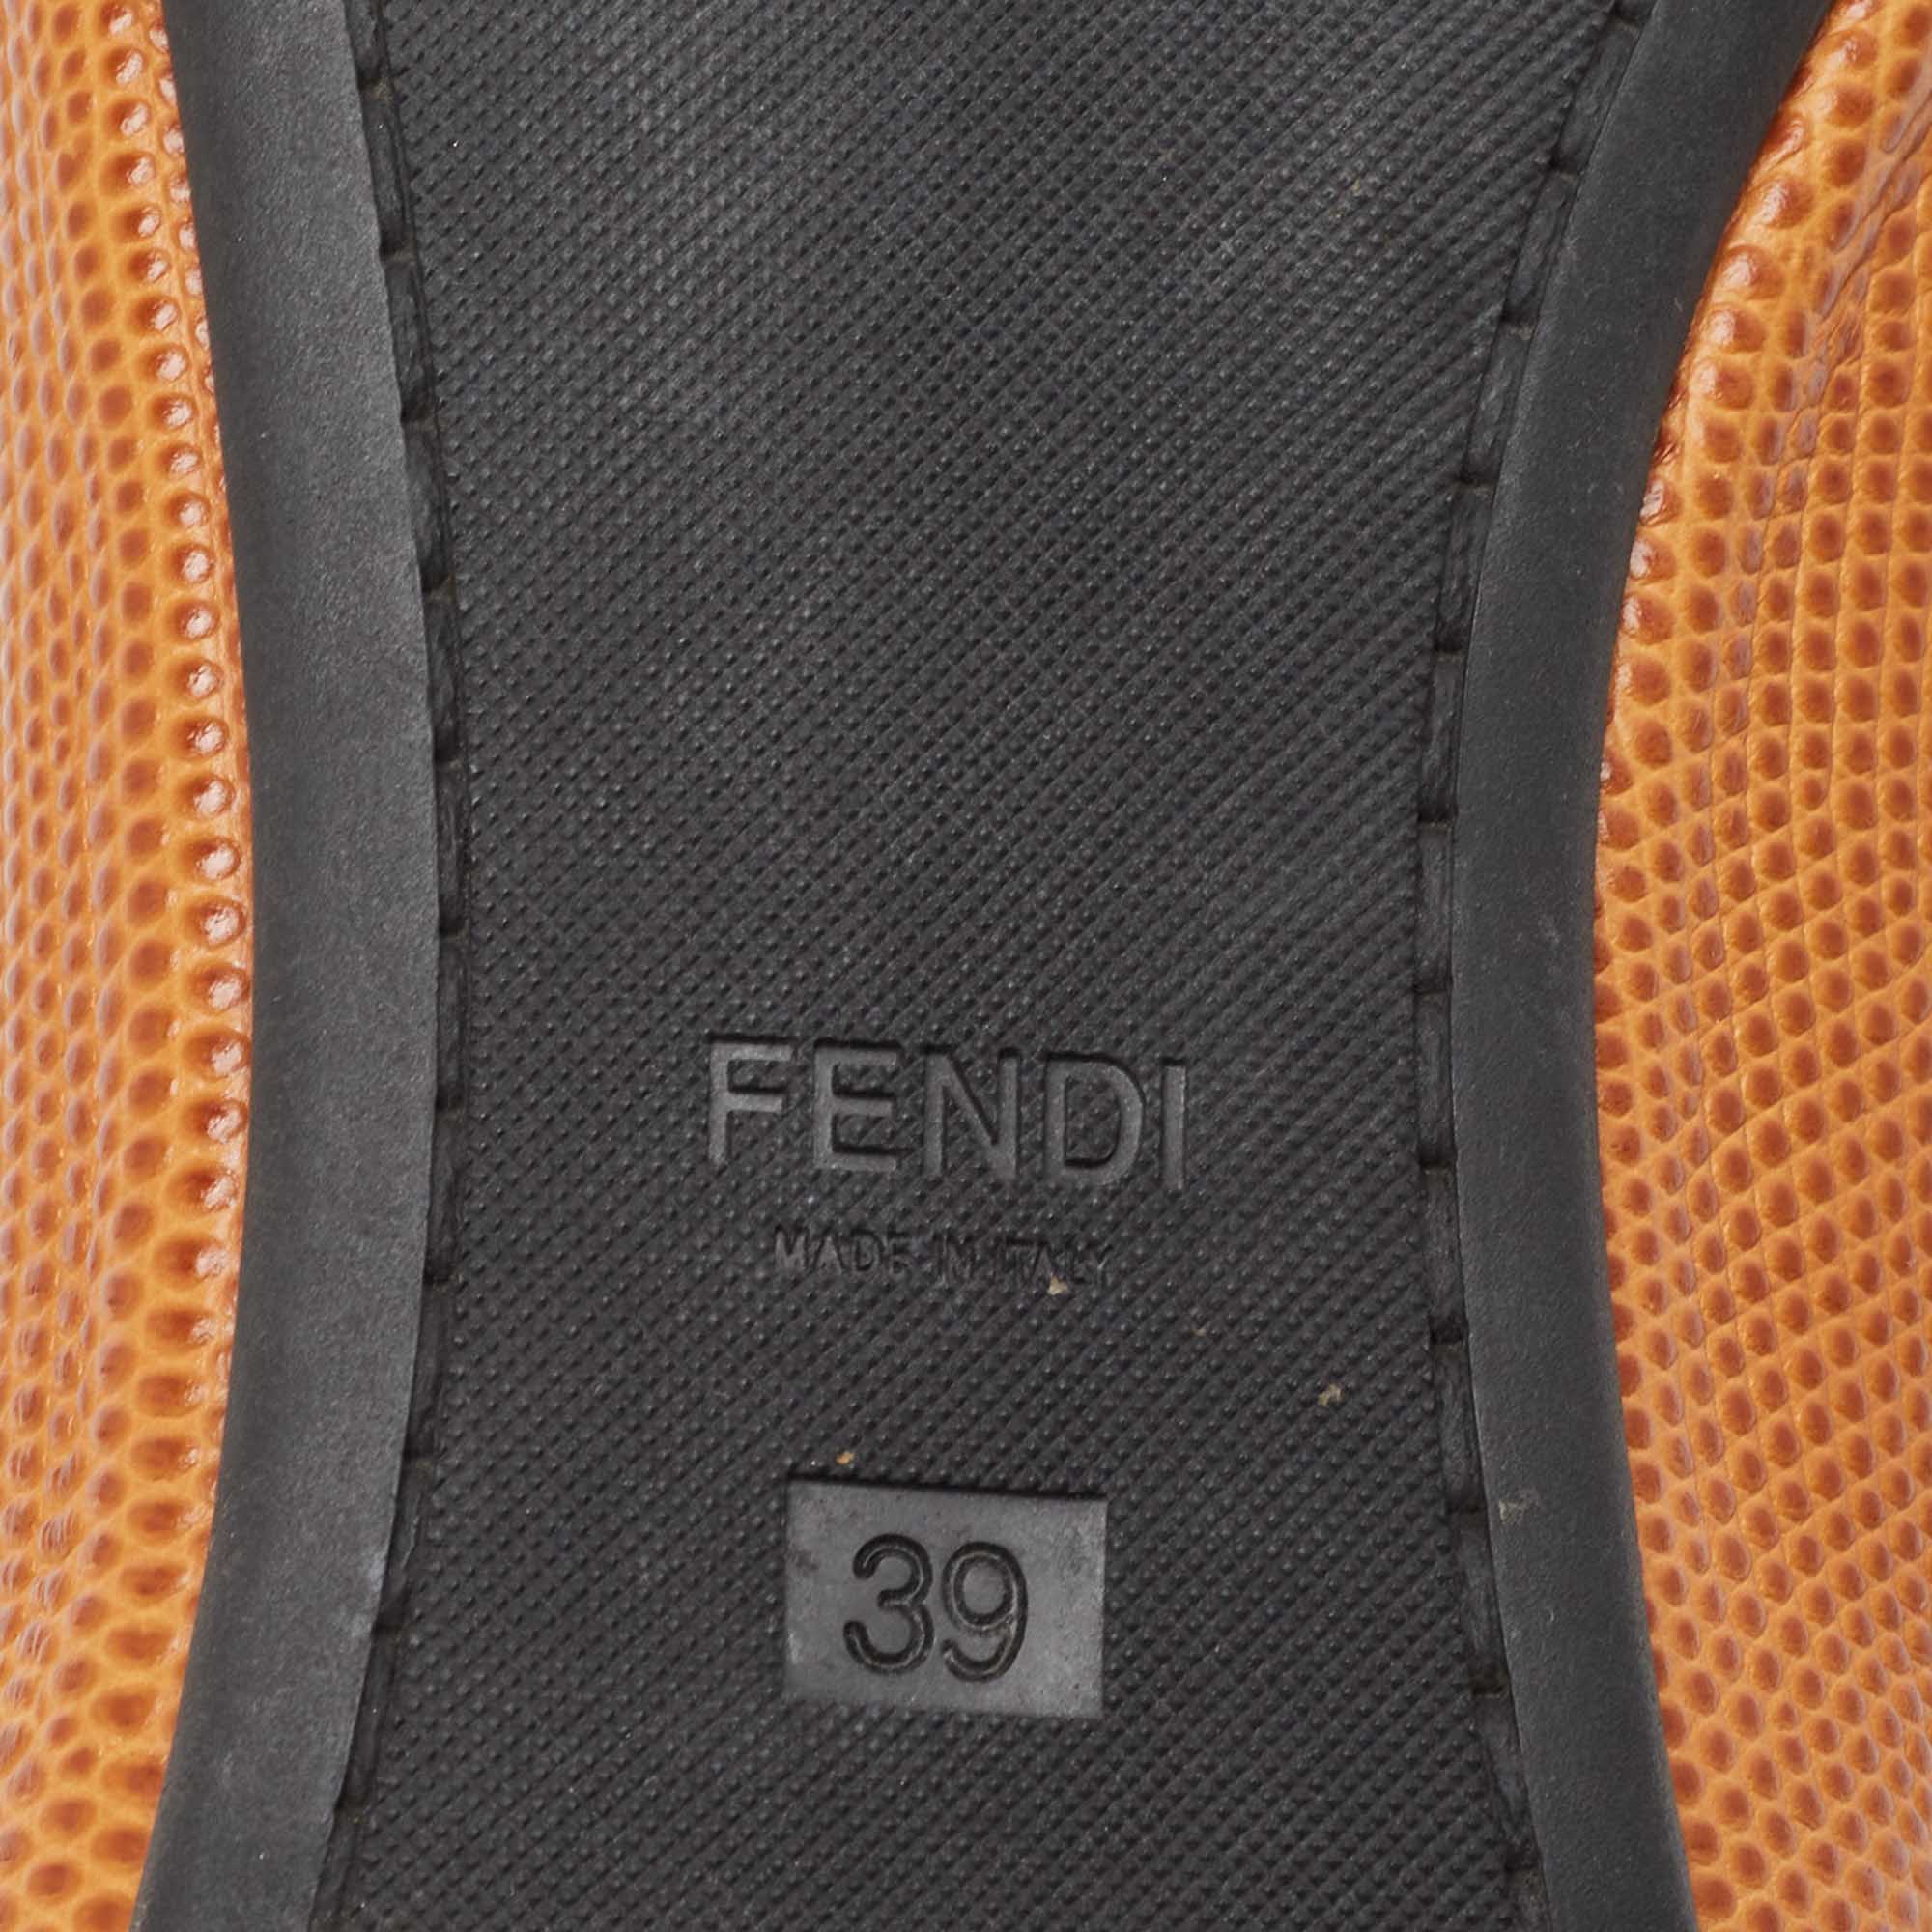 Fendi Brown Lizard Embossed Leather Buckle Detail Ballet Flats Size 39